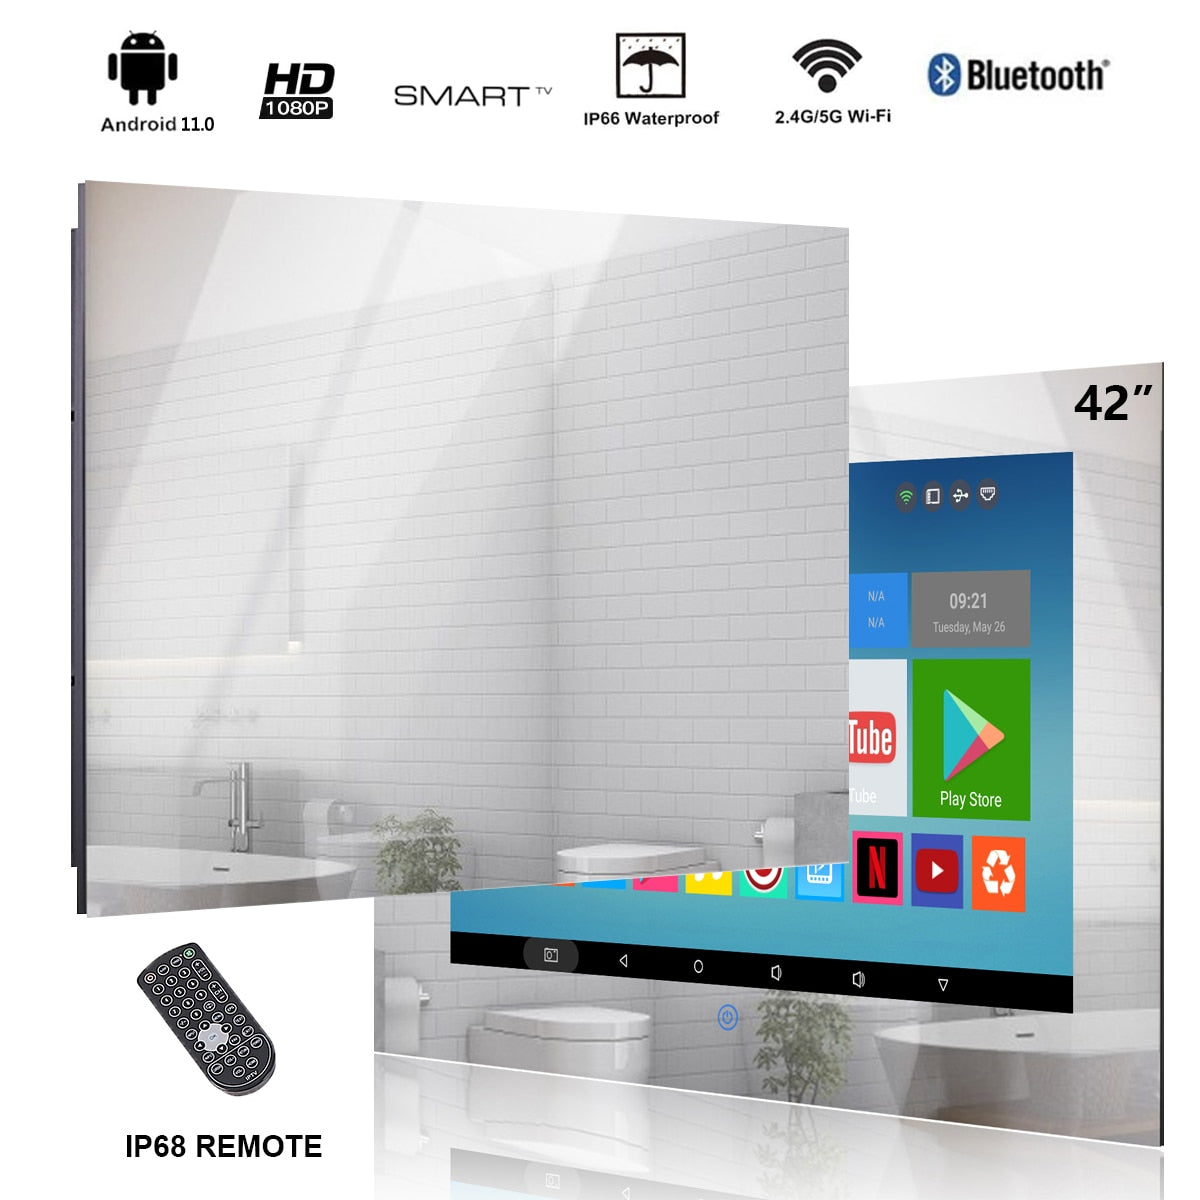 Haocrown 42 Inch Waterproof Mirror TV, Smart Android 11.0 Television Full HD 1080P Built-in Wi-Fi Bluetooth Waterproof Speakers